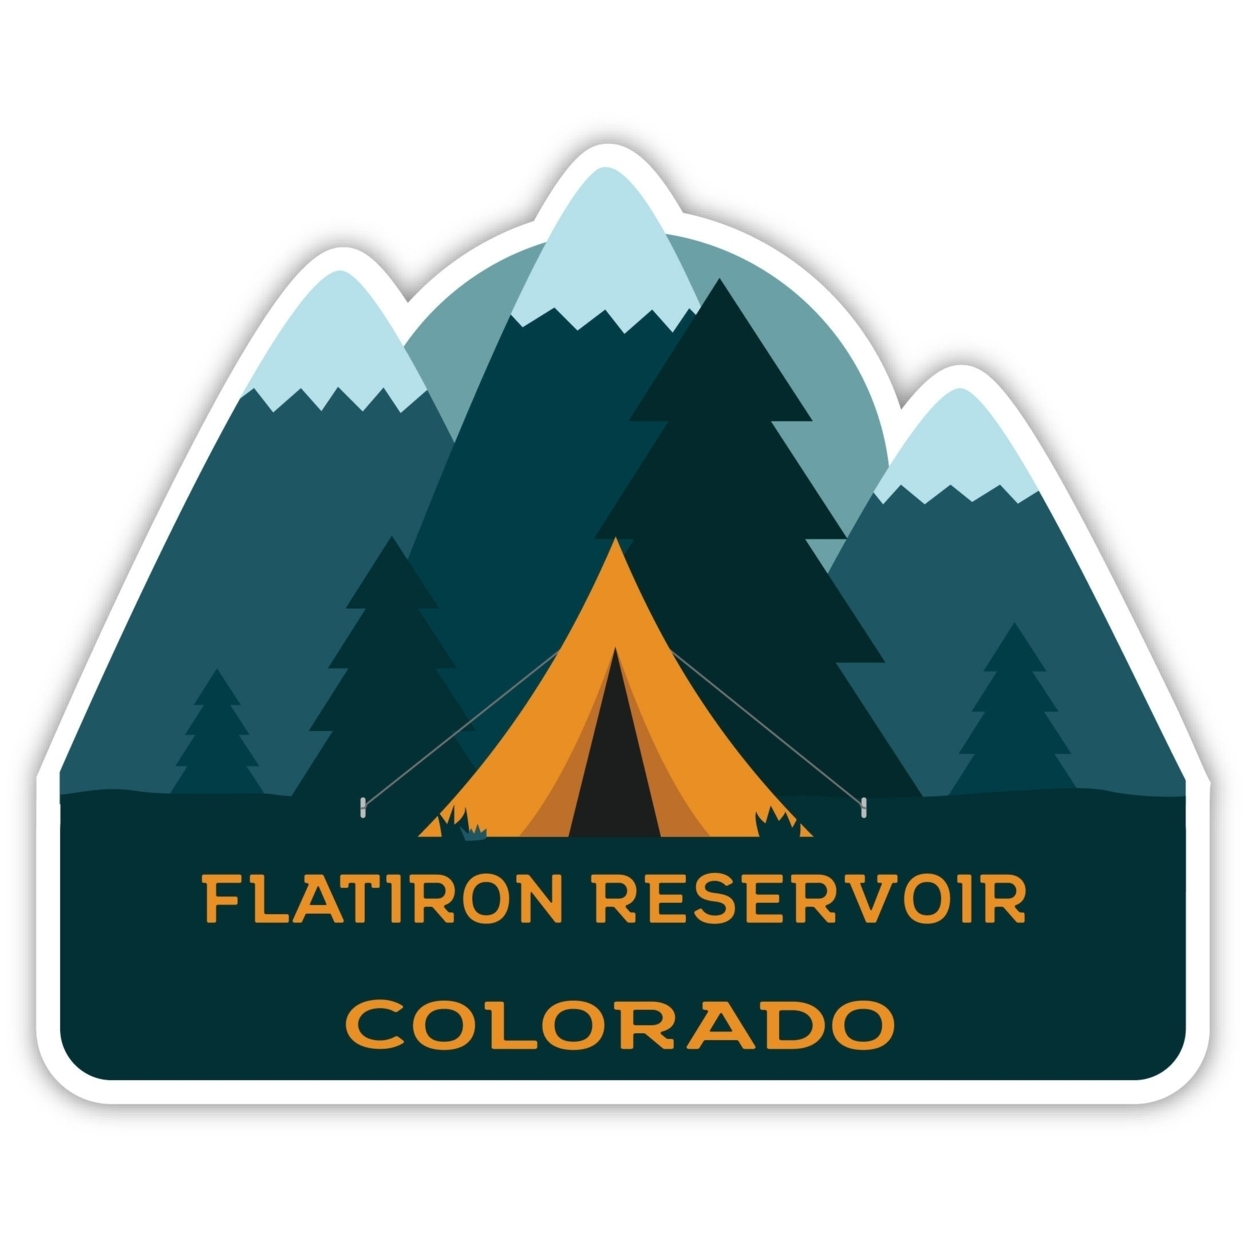 Flatiron Reservoir Colorado Souvenir Decorative Stickers (Choose Theme And Size) - 4-Pack, 4-Inch, Tent